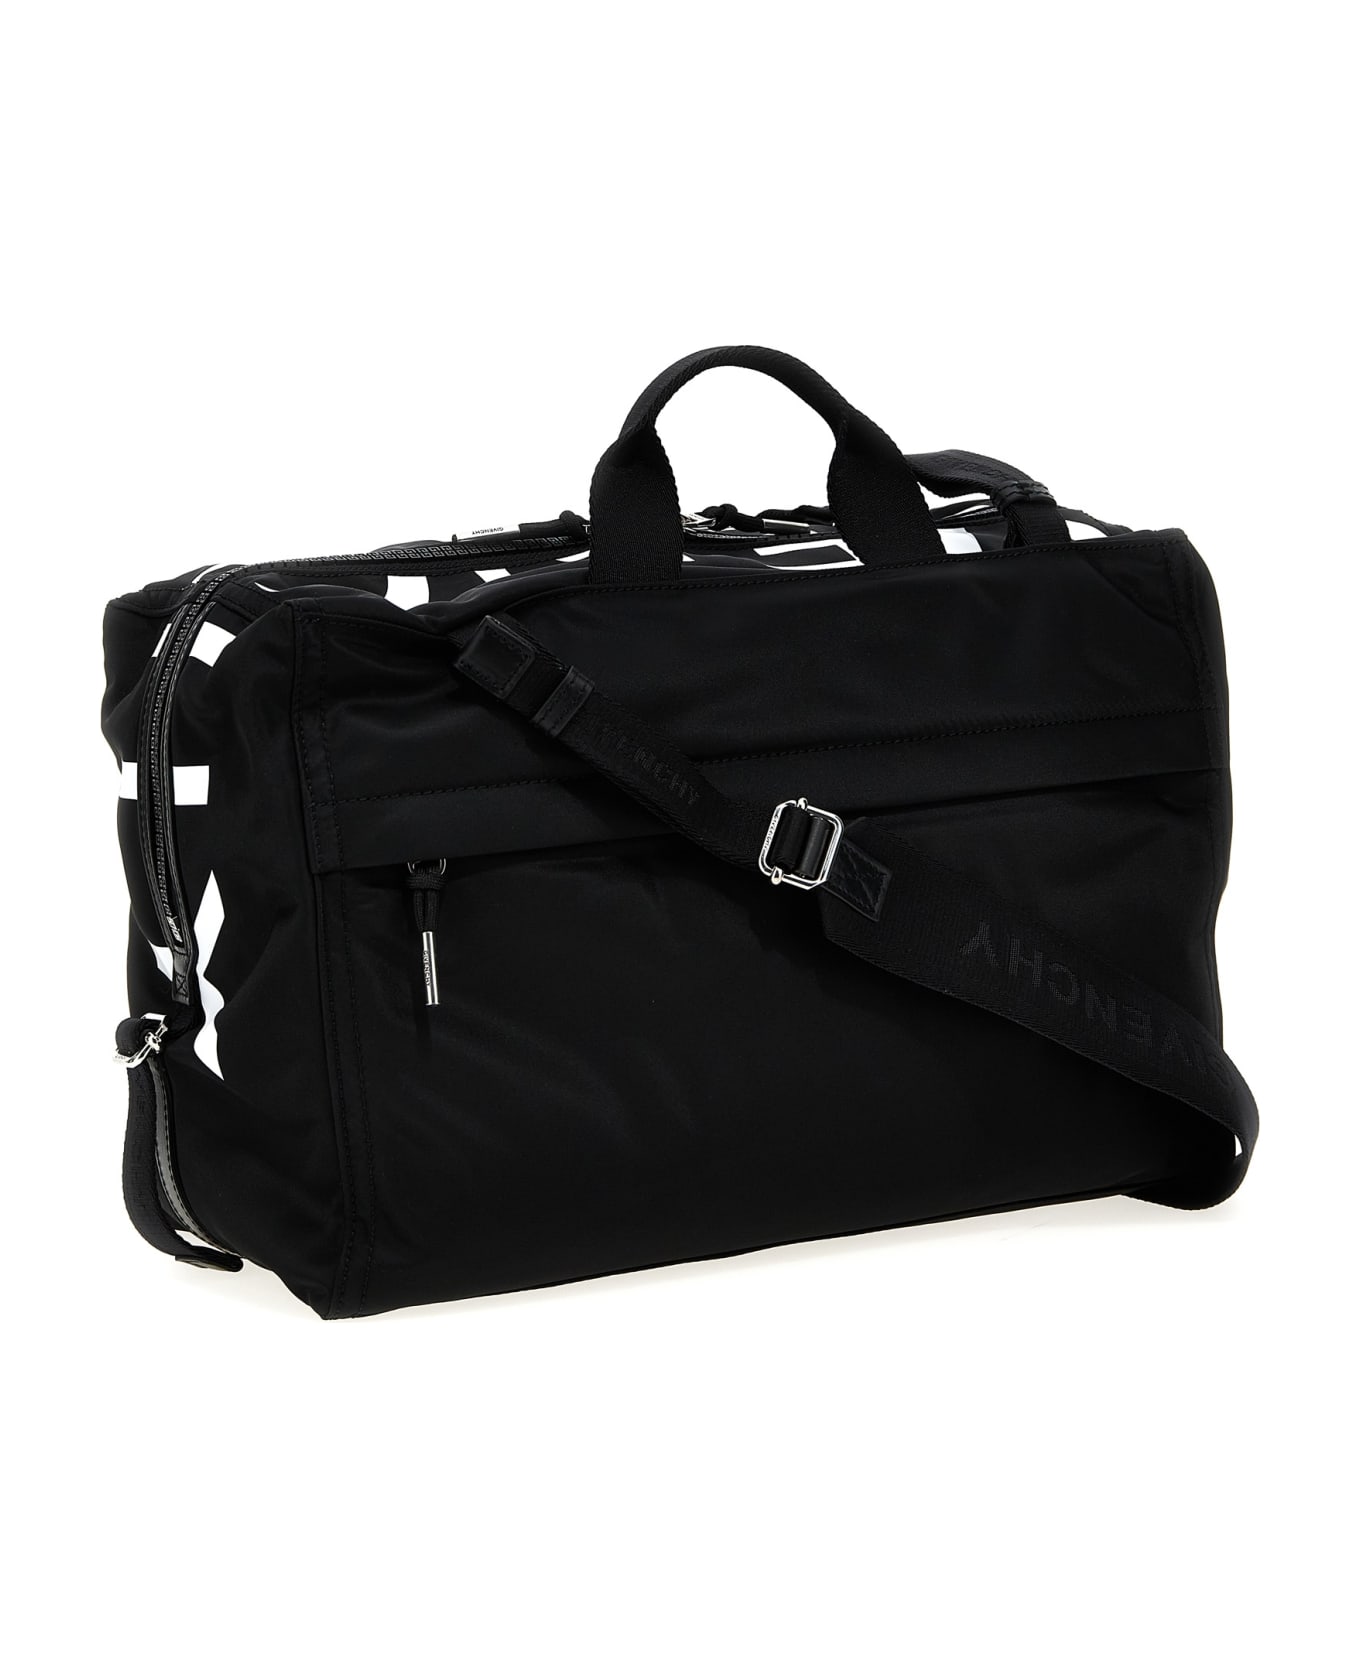 Givenchy Pandora Medium Bag - Black White